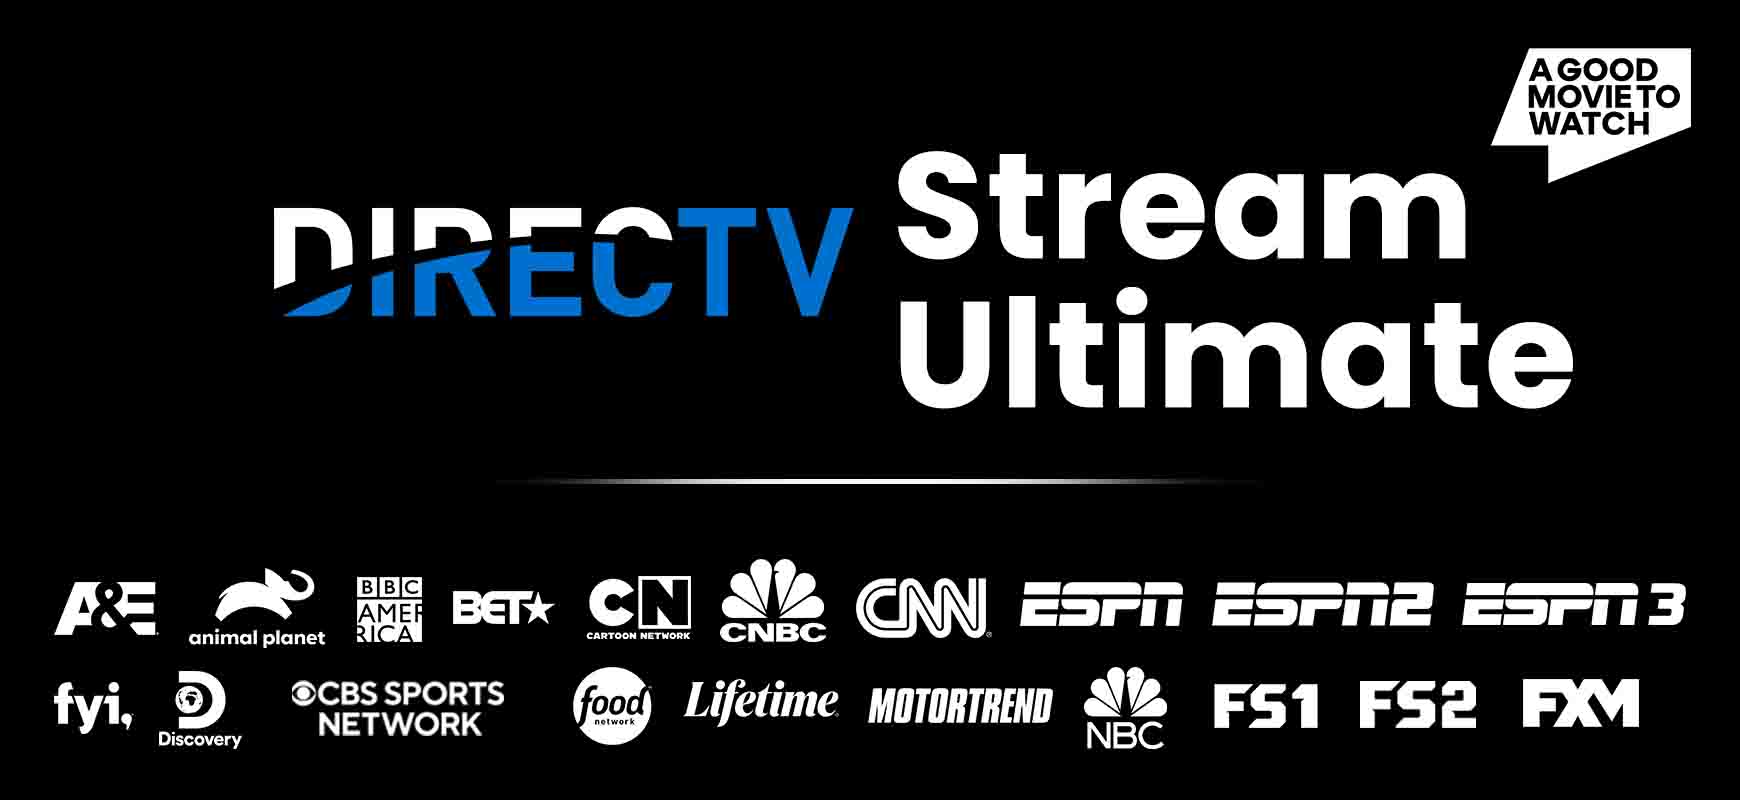 directv sec network